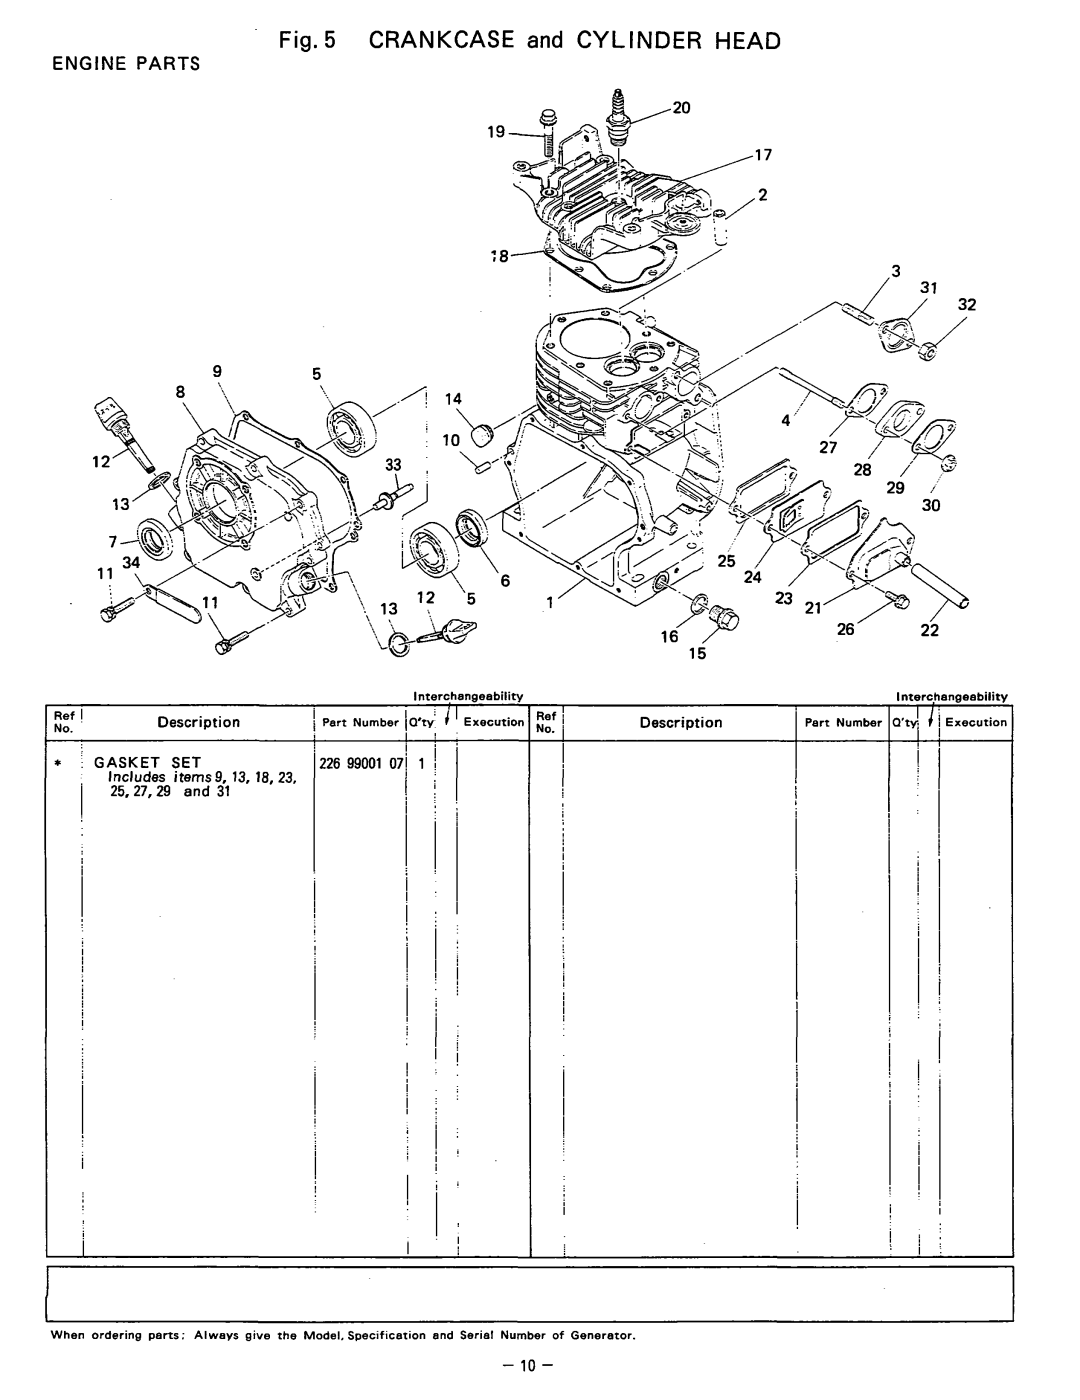 Subaru Robin Power Products R1200 manual CRANKCASE and CYLINDER HEAD, Engine Parts, lndudes it8mS9, nterchangeability 